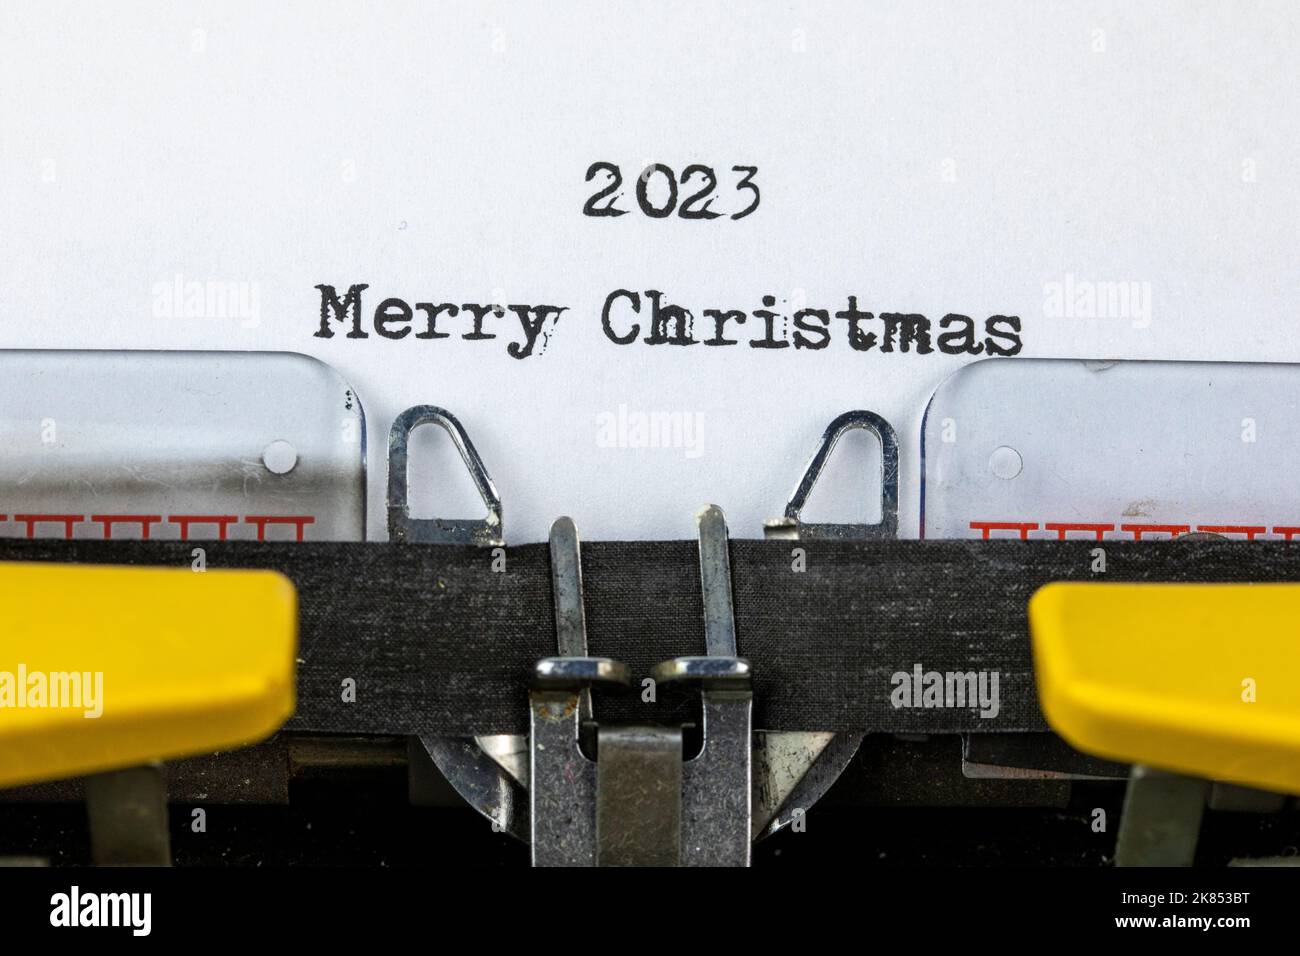 Merry Christmas 2023 written on an old typewriter Stock Photo